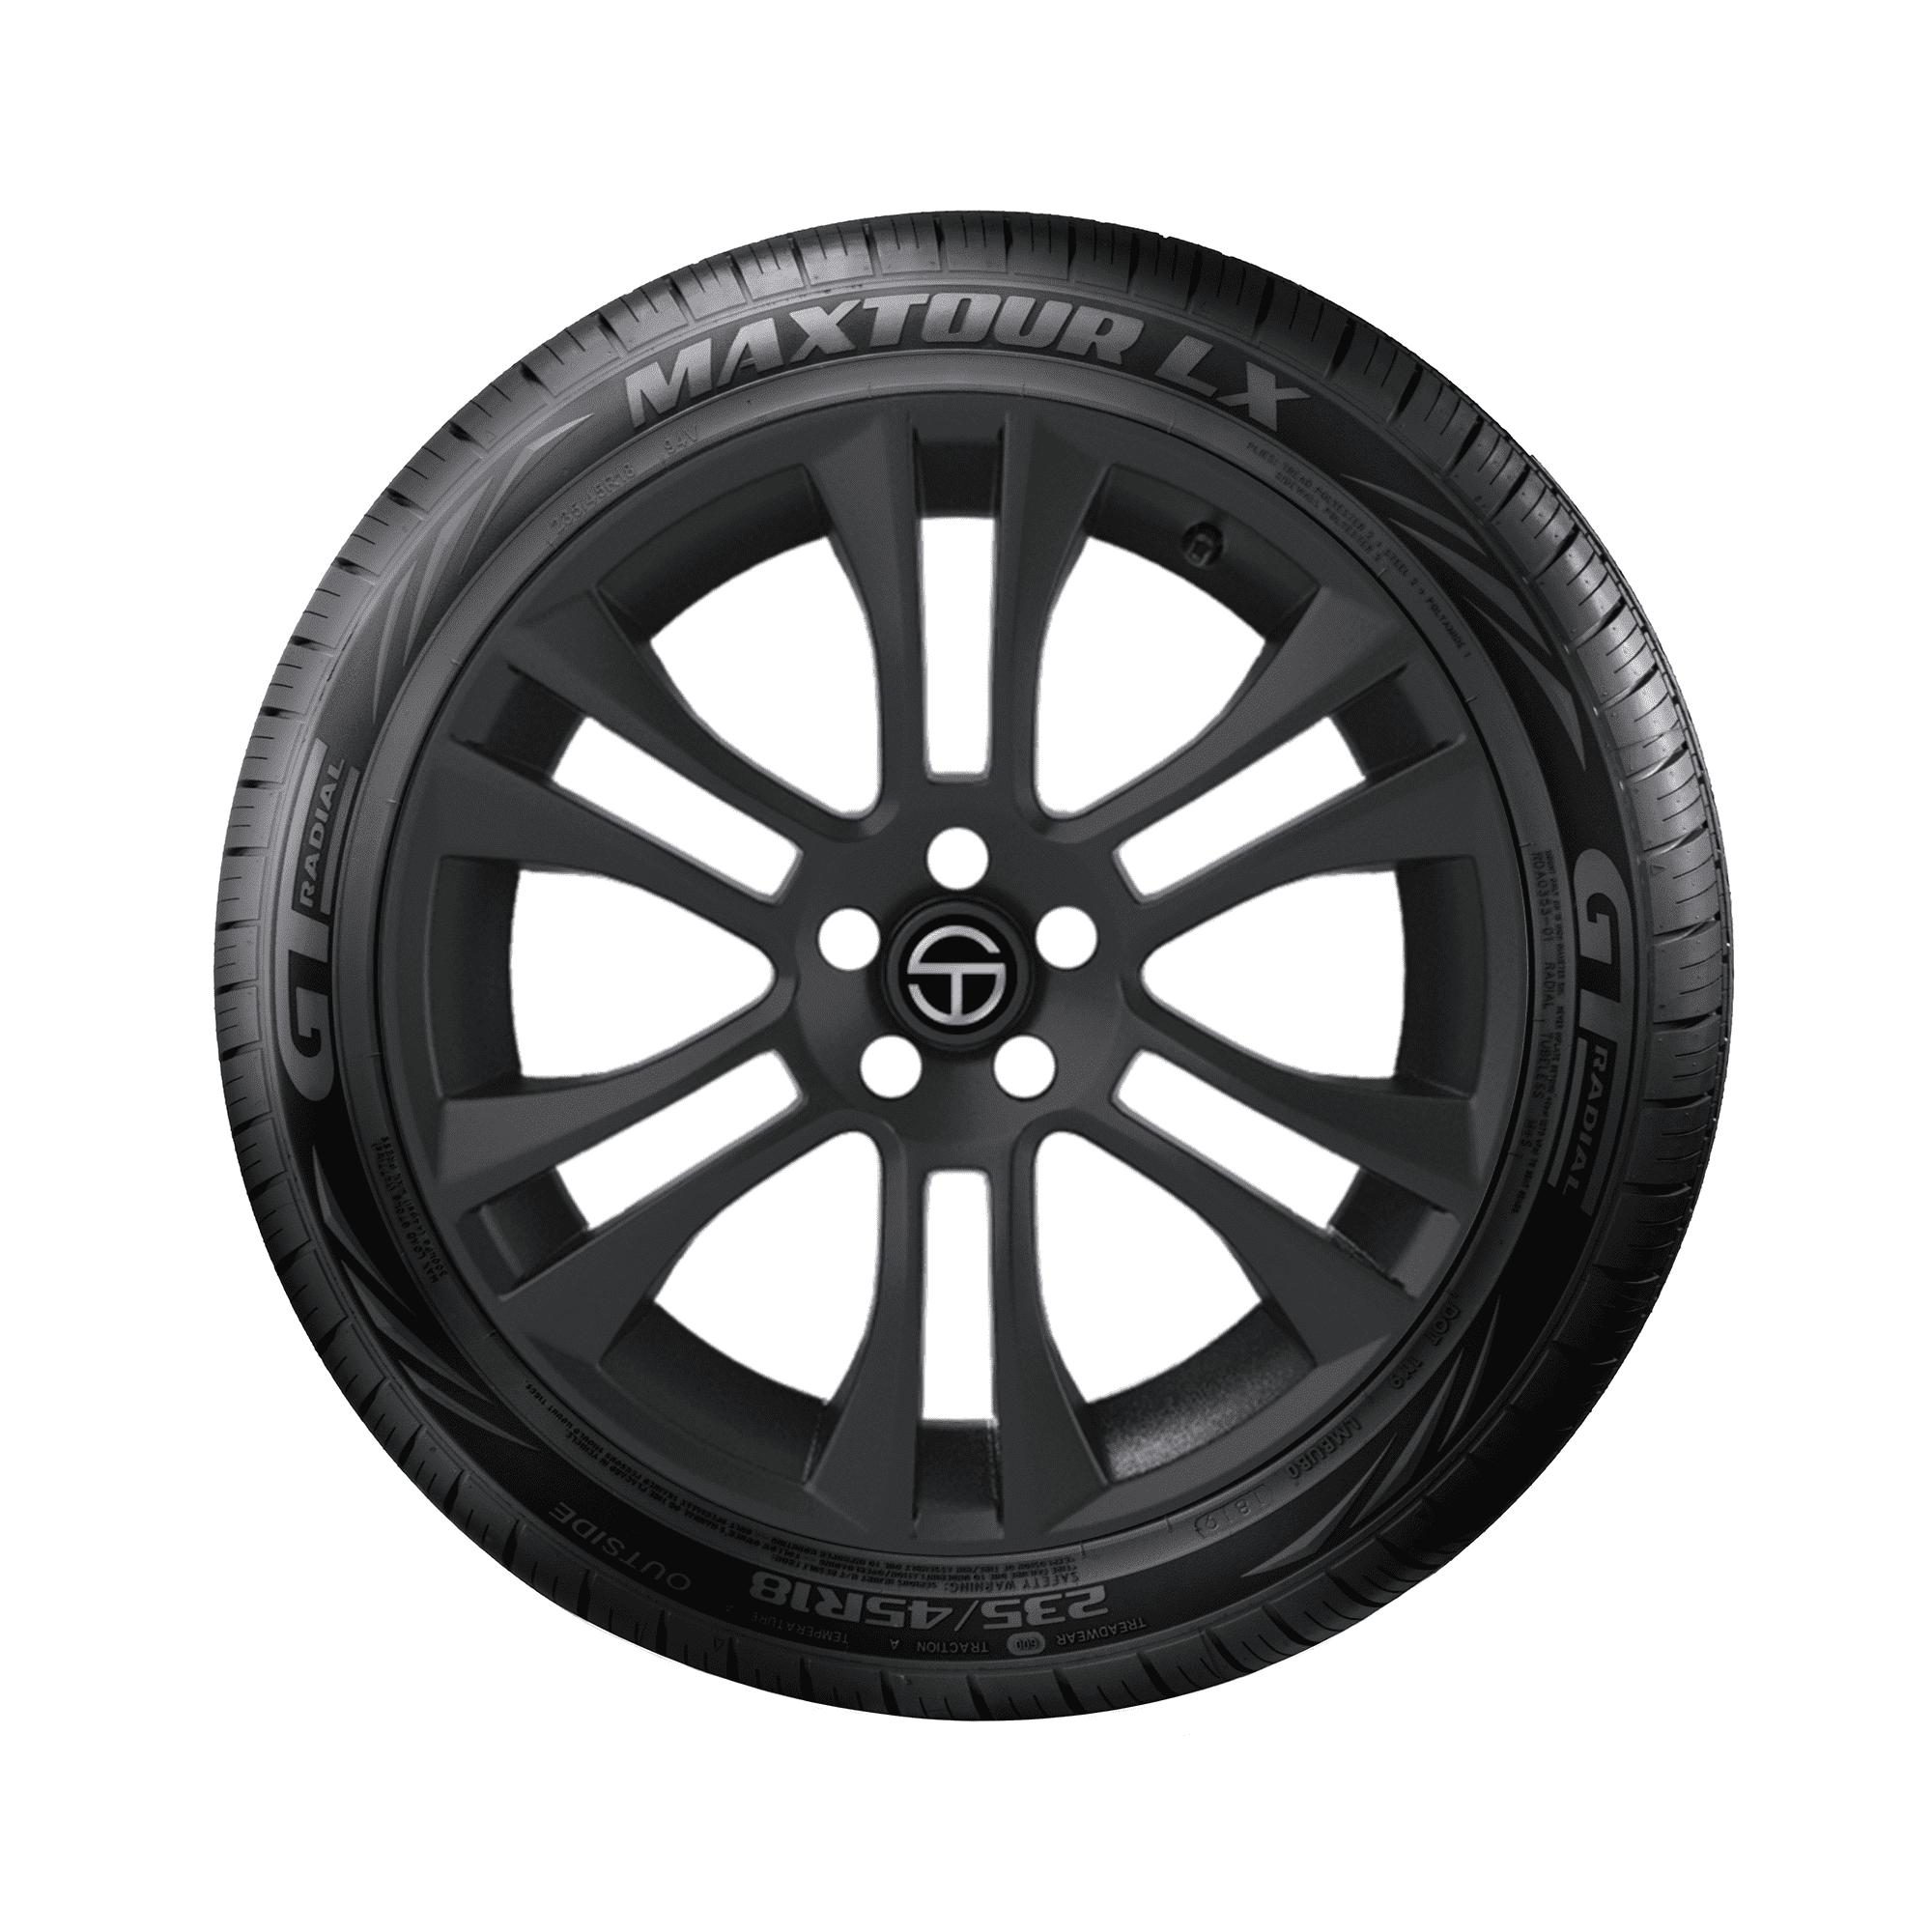 GT MAXTOUR ALL SEASON All-Season Radial Tire 185/60R15 84T 